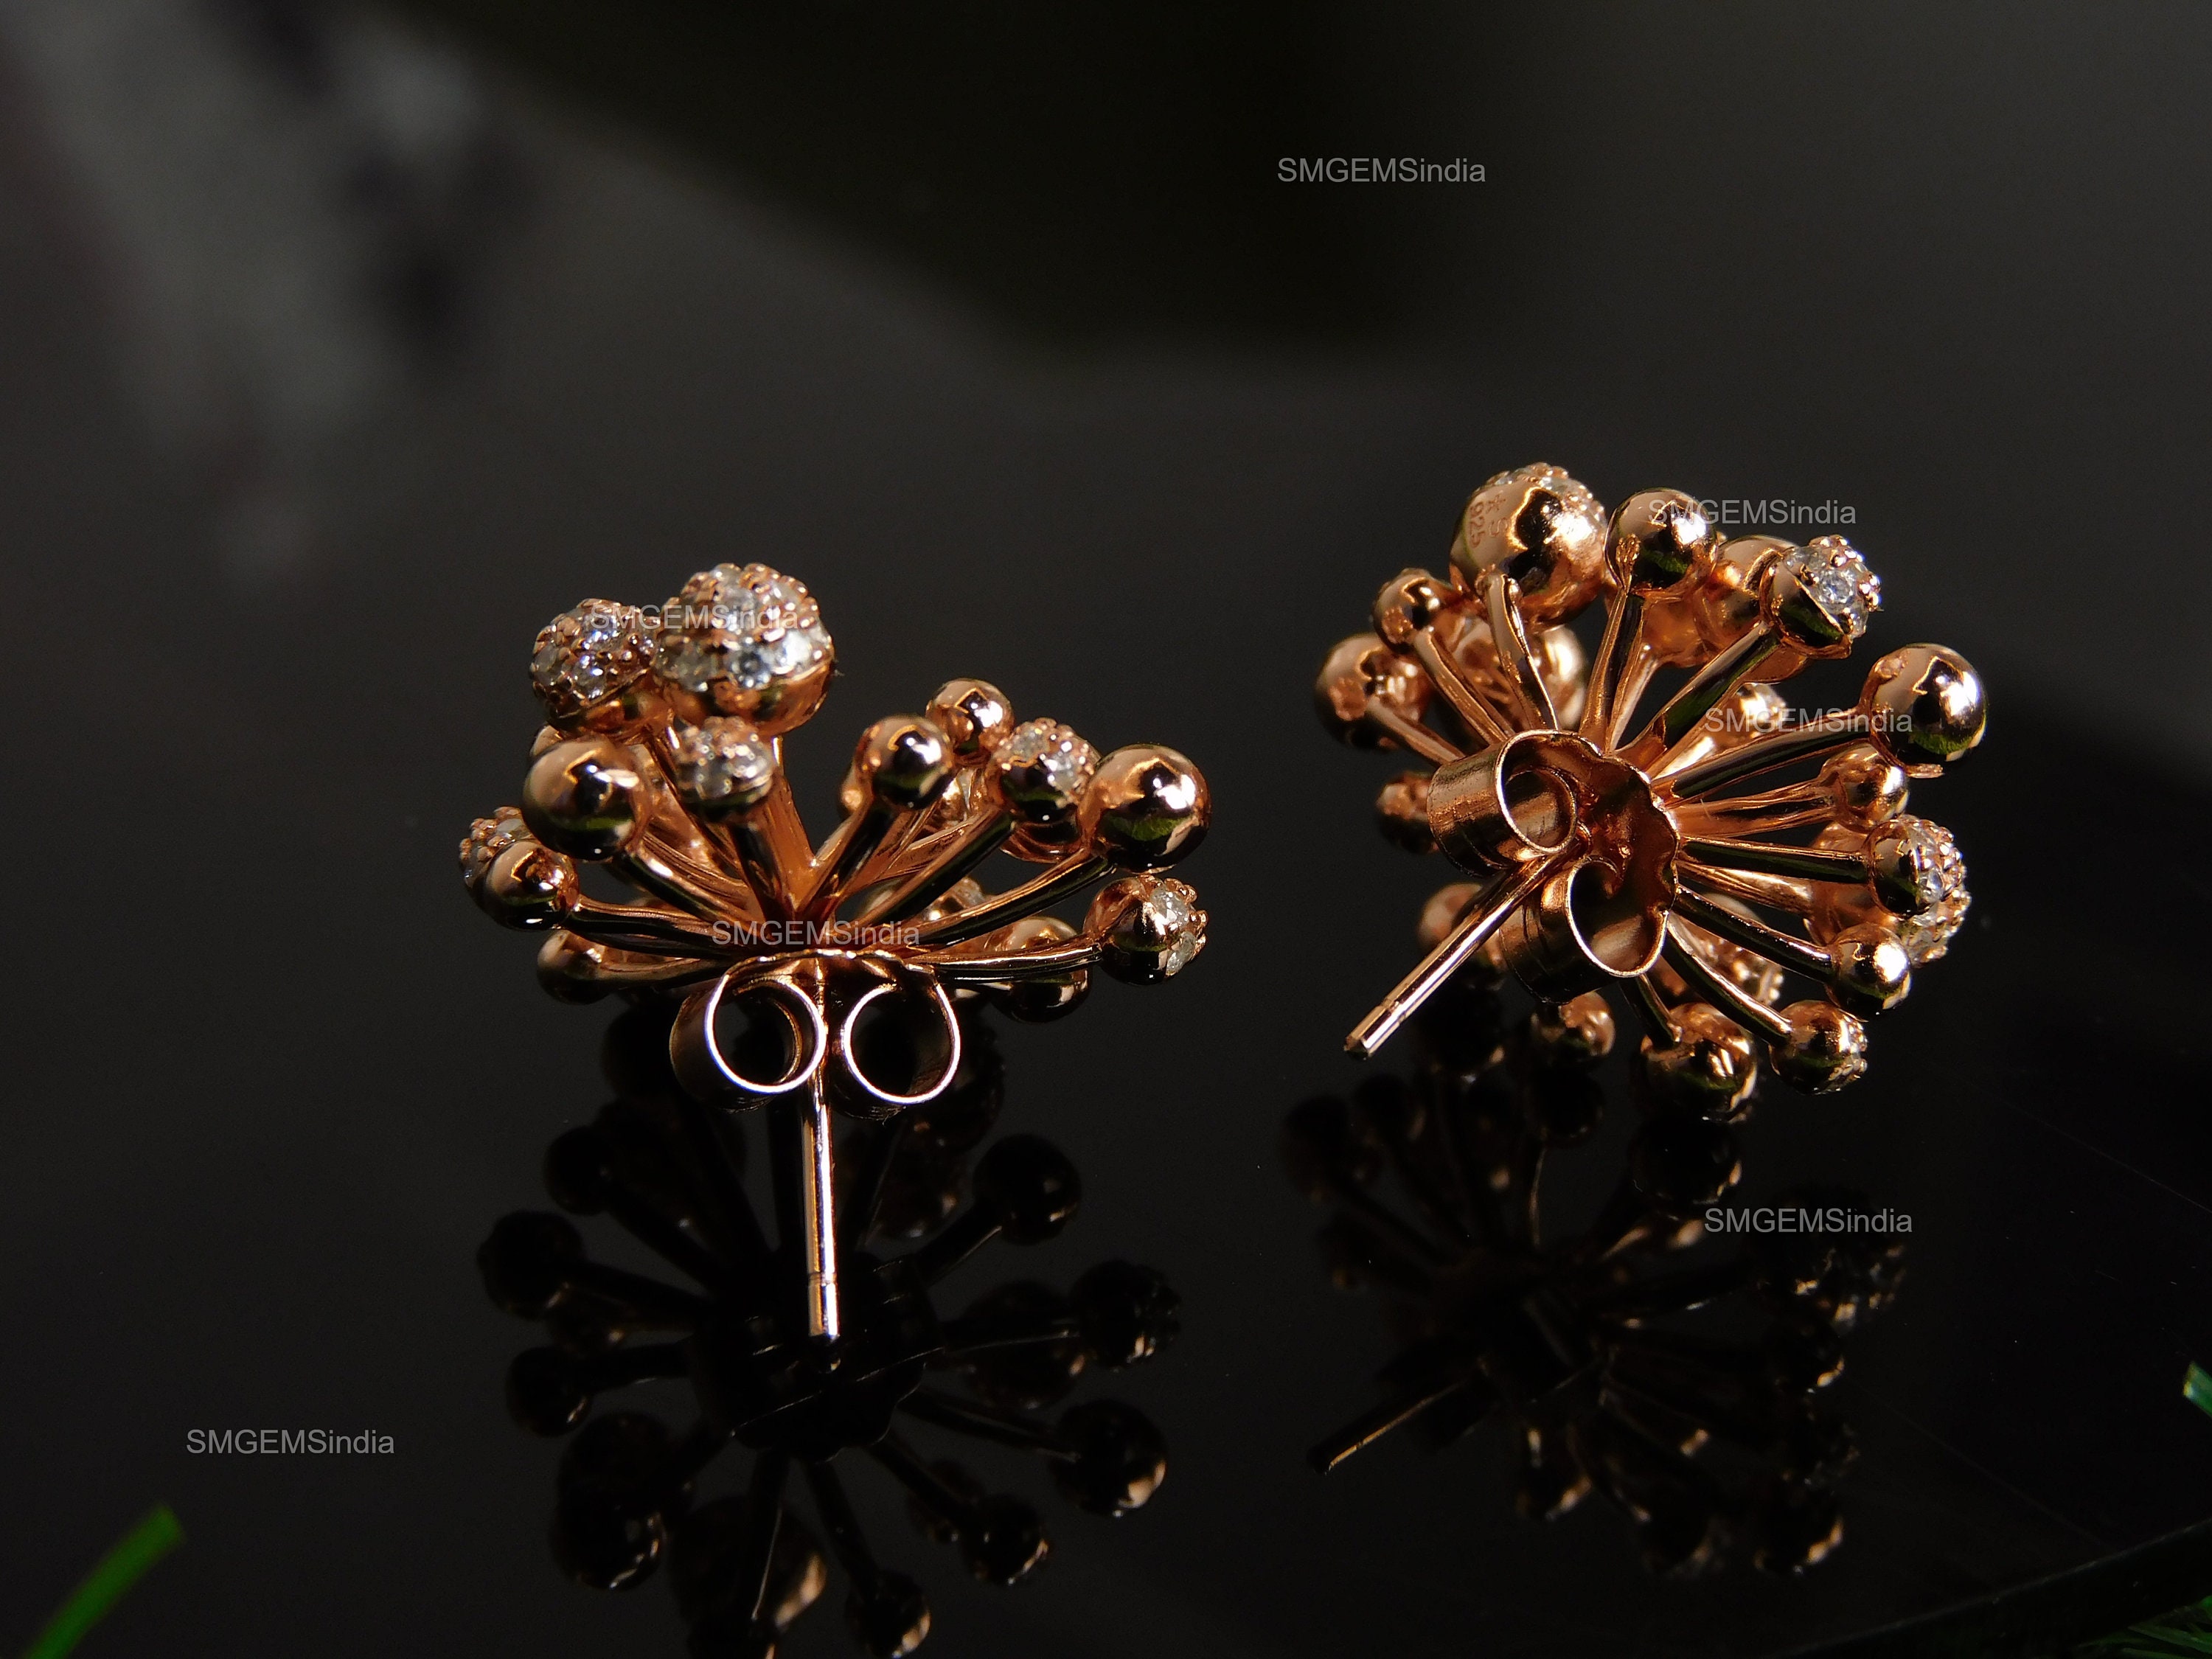 RVZJY 18K Gold Hoop Earrings for Women Minimalist Small India | Ubuy